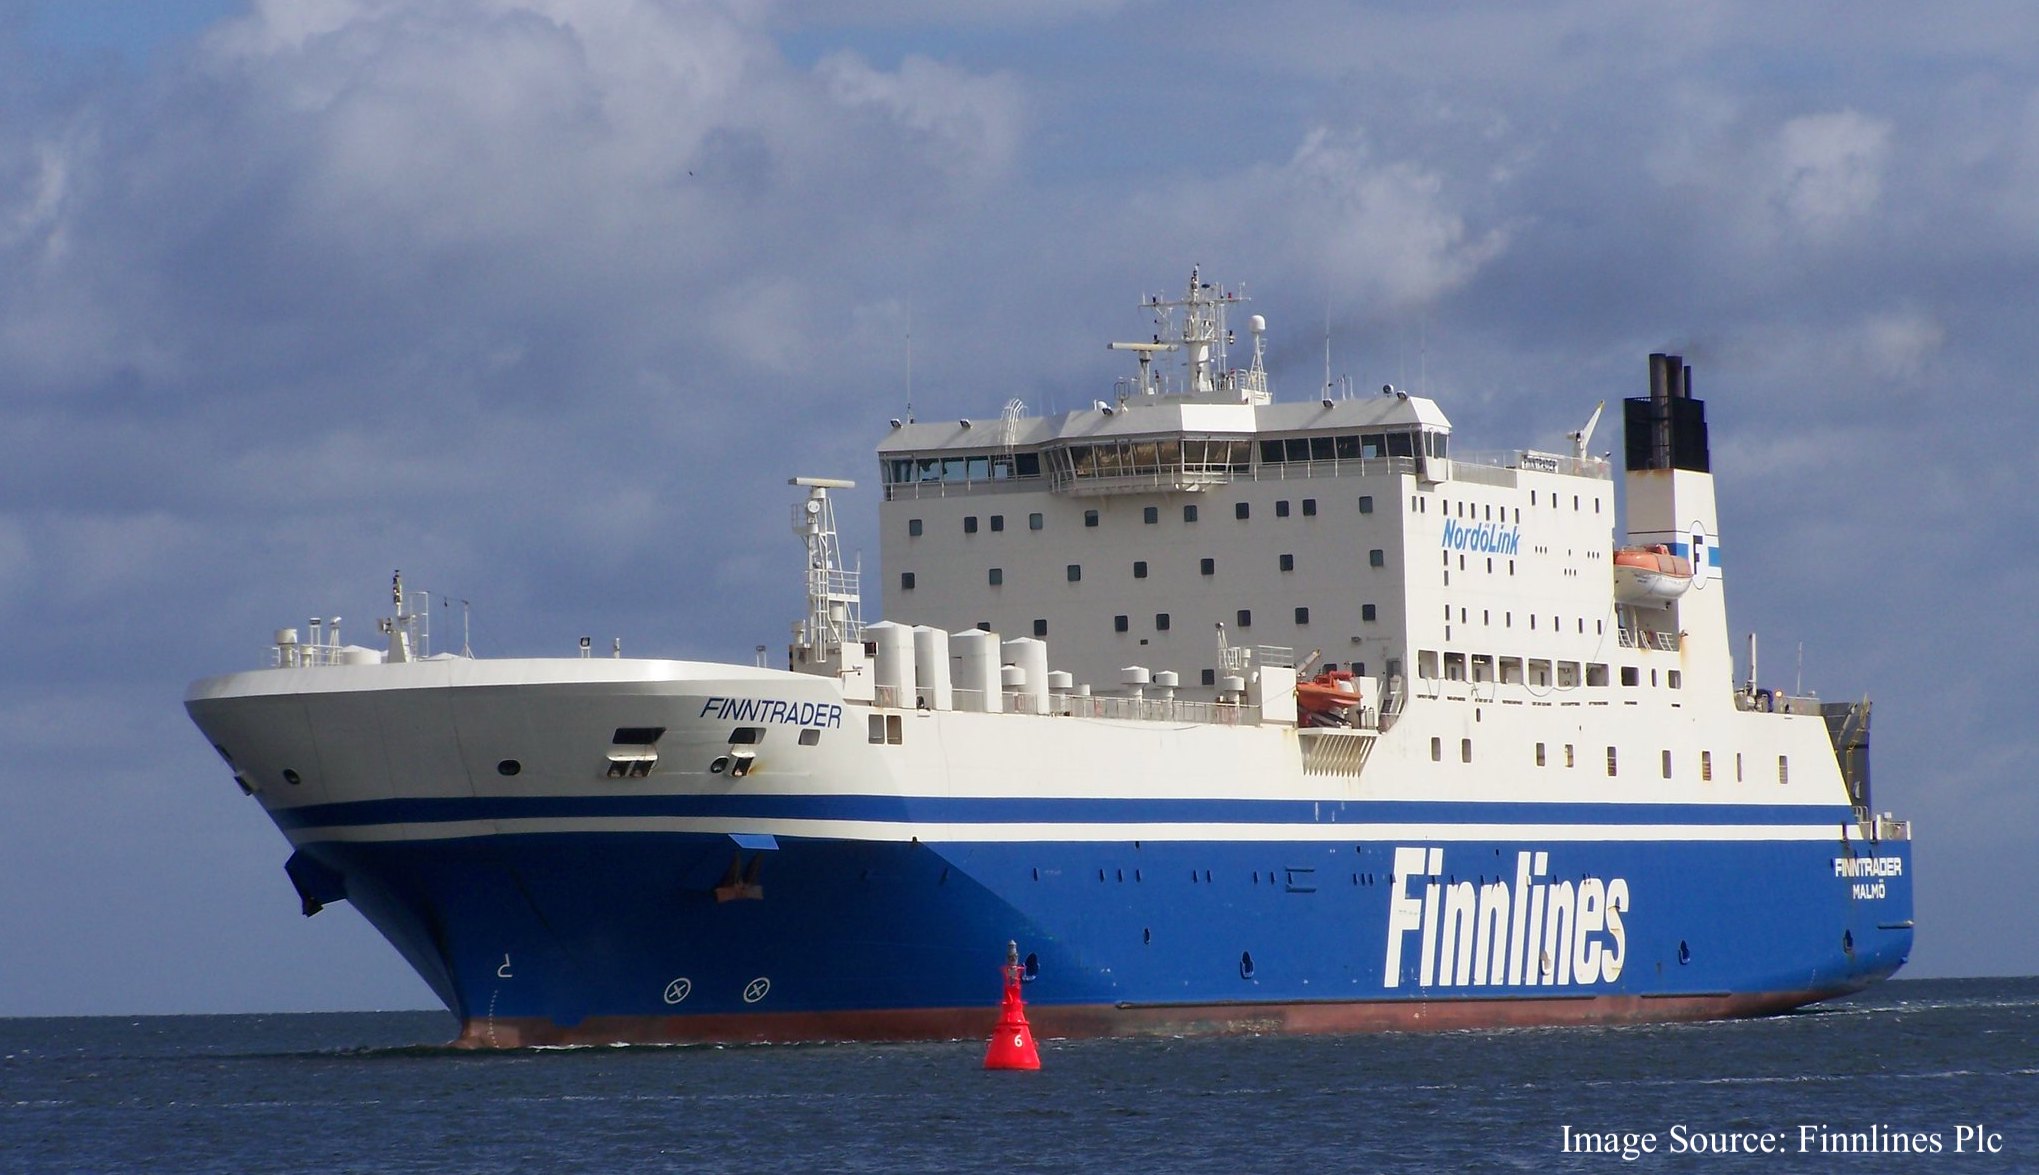 Foto van Finnlines - Finntrader schip